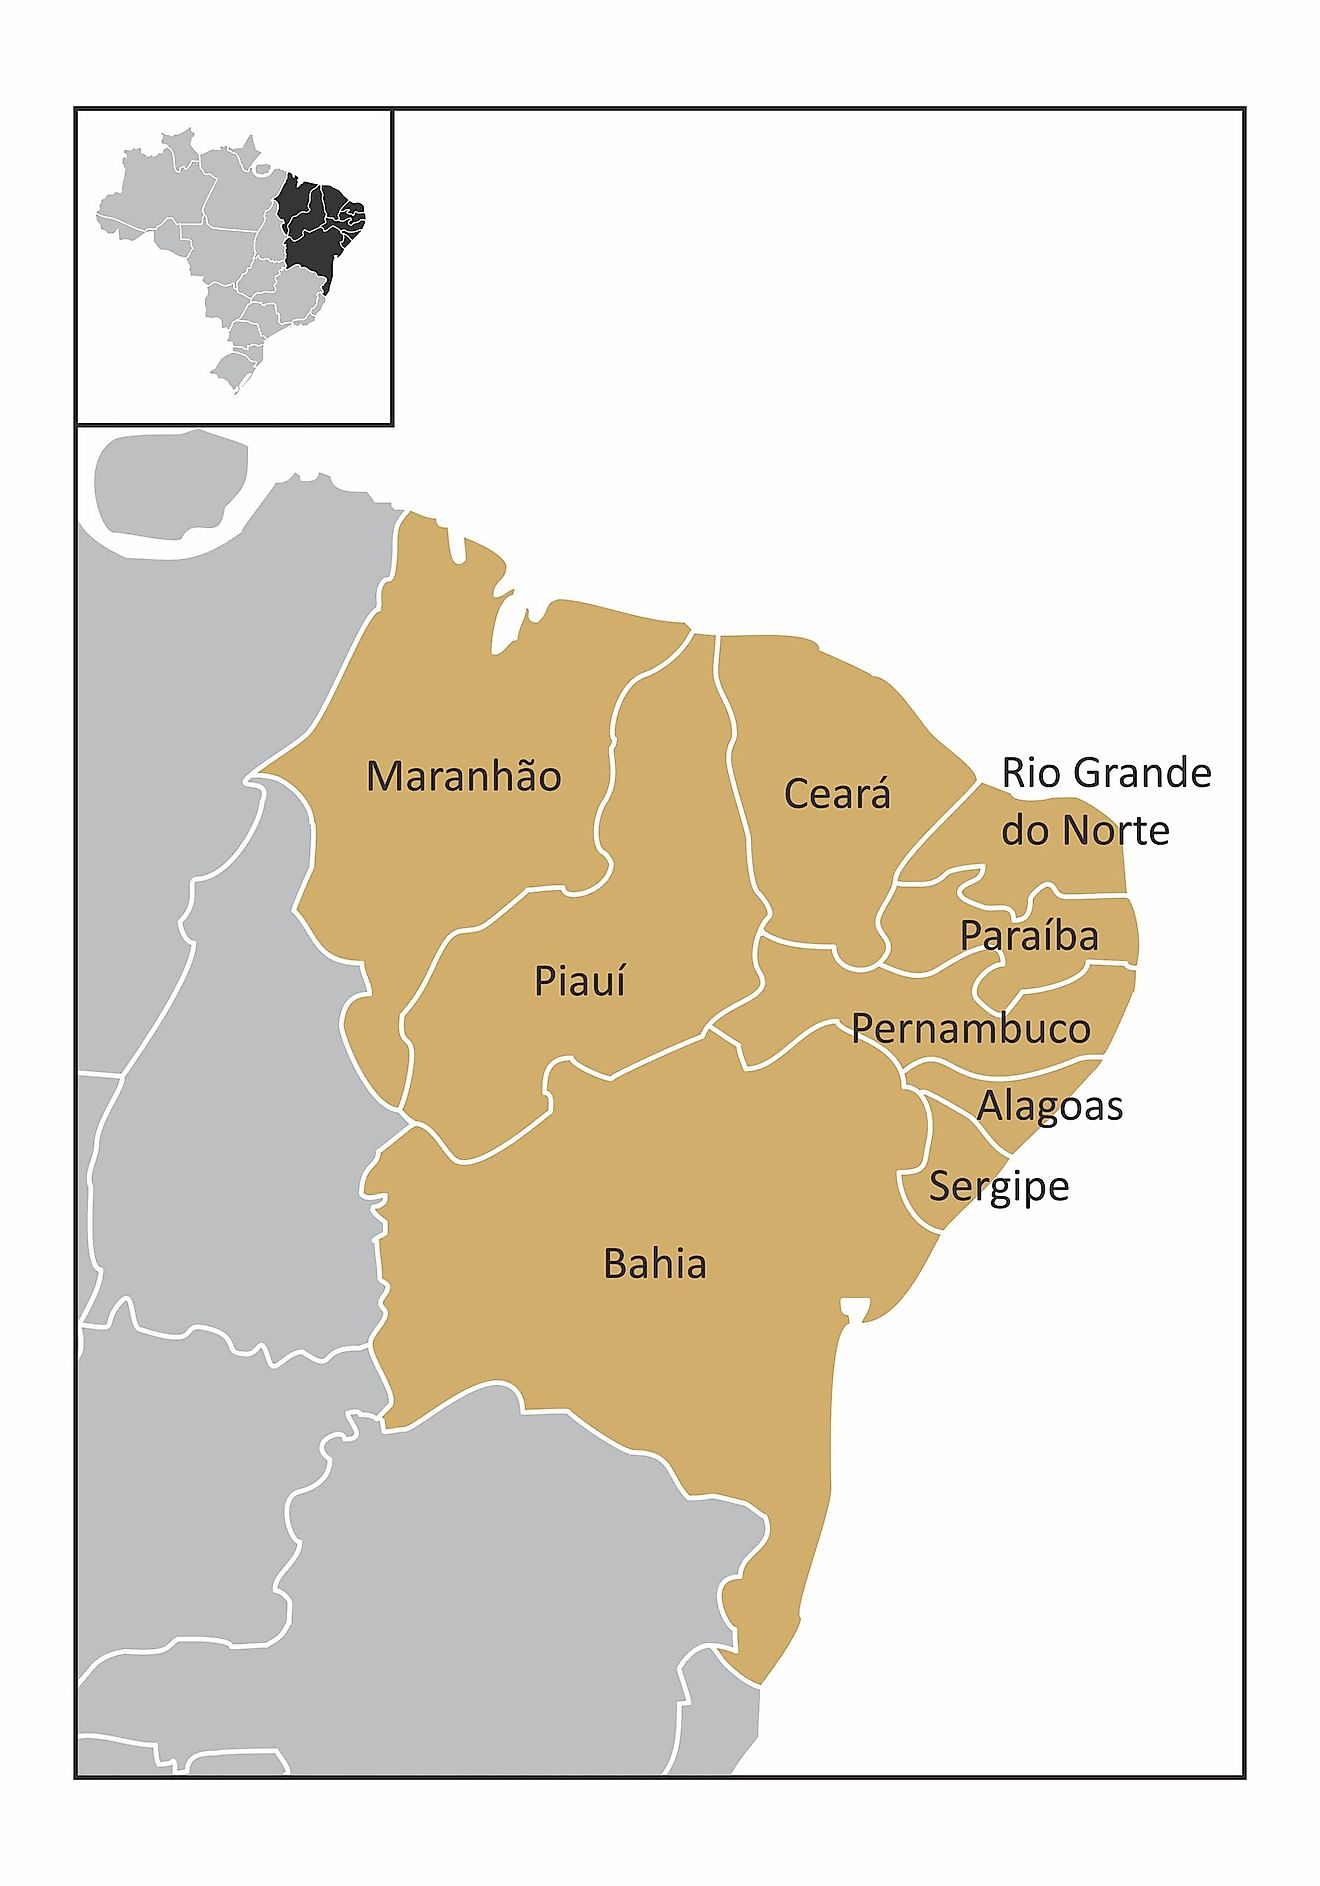 Map of the northeast region of Brazil. Image credit: Luisrftc/Shutterstock.com